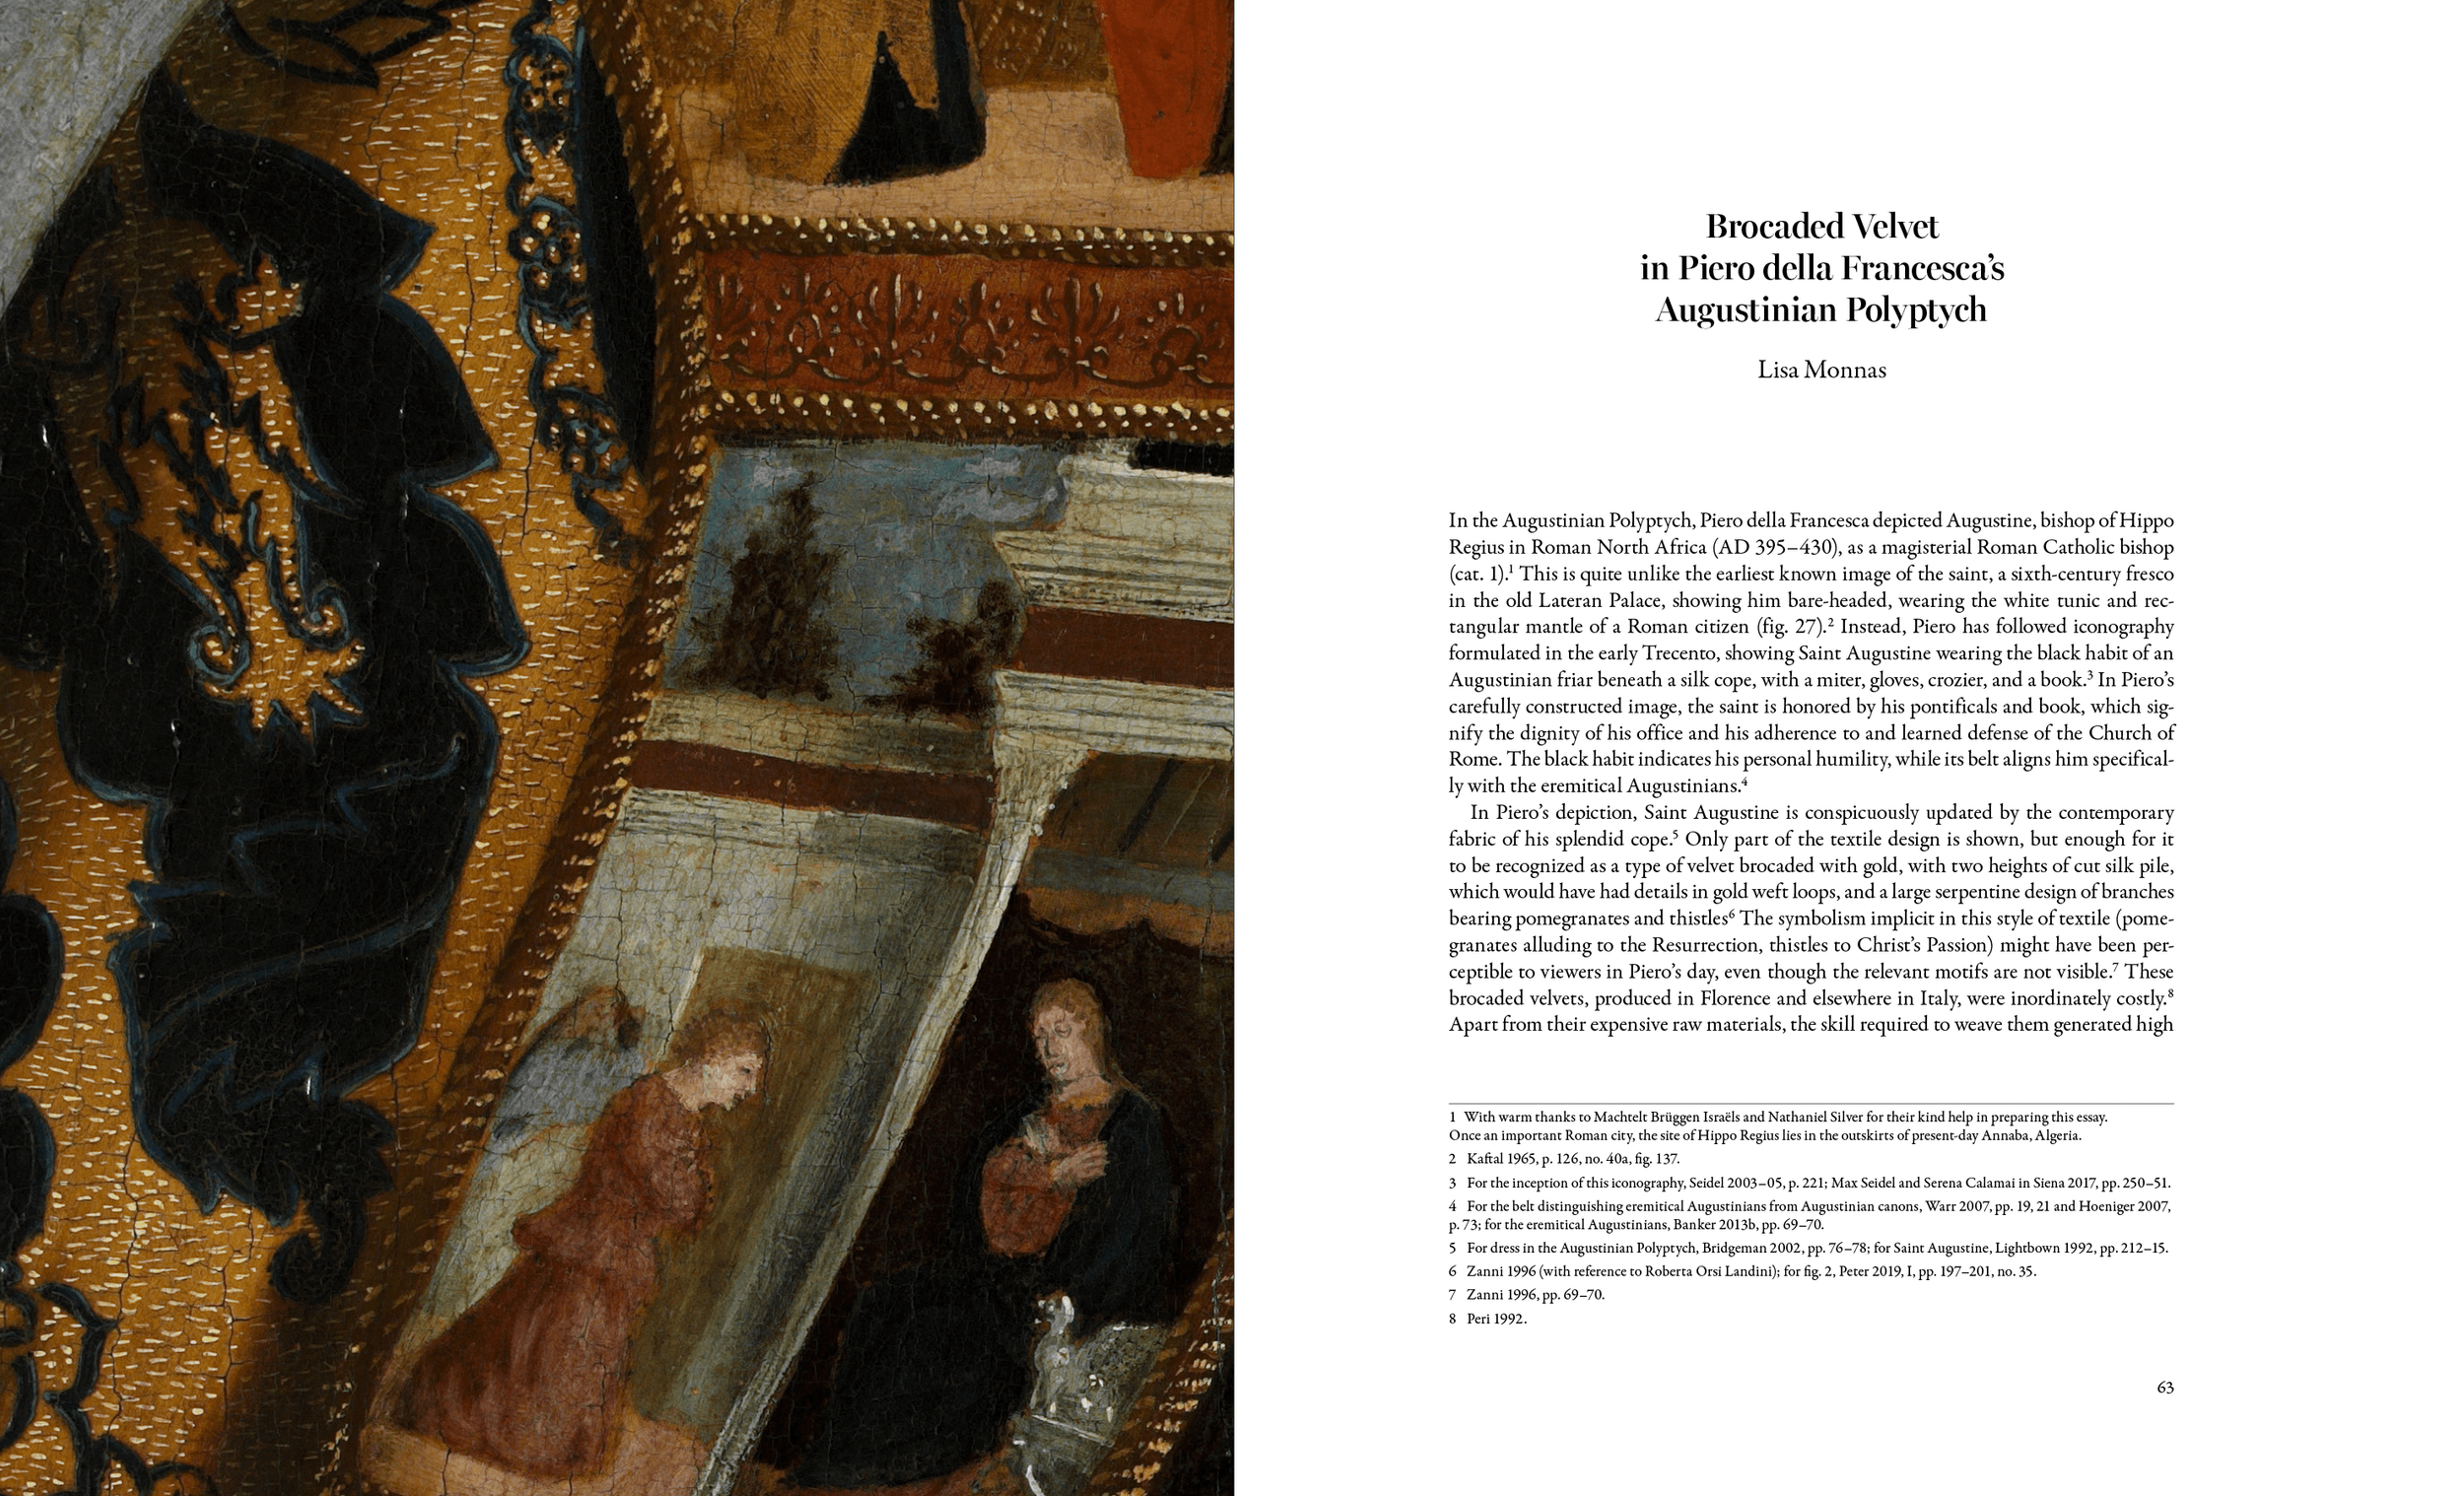 01_Piero della Francesca. The Augustinian polyptych reunited-min.png